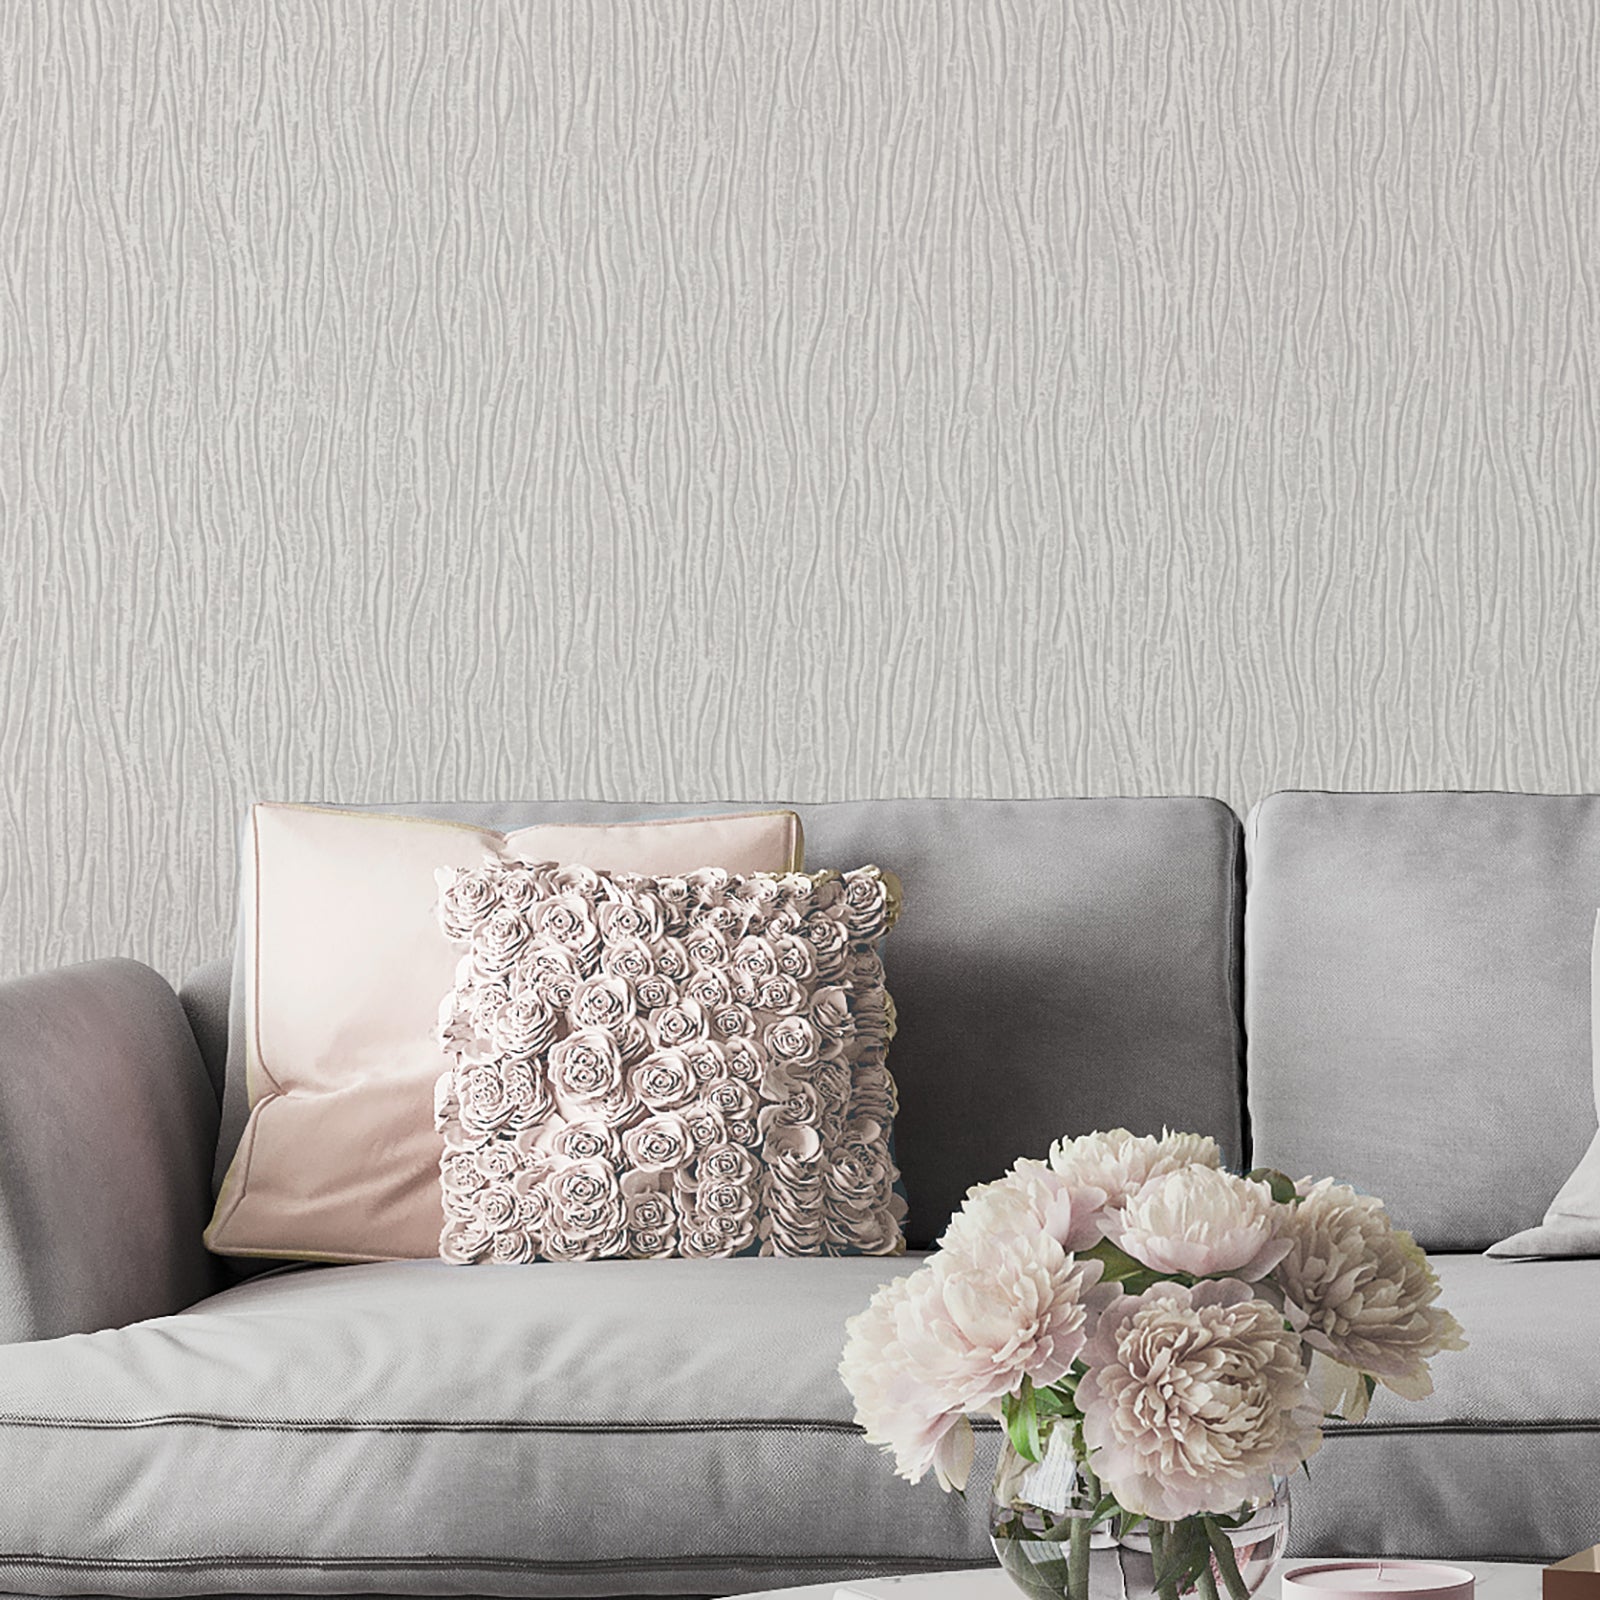 Tiffany Texture Dark Silver Wallpaper | WonderWall by Nobletts | #Variant SKU# | Belgravia